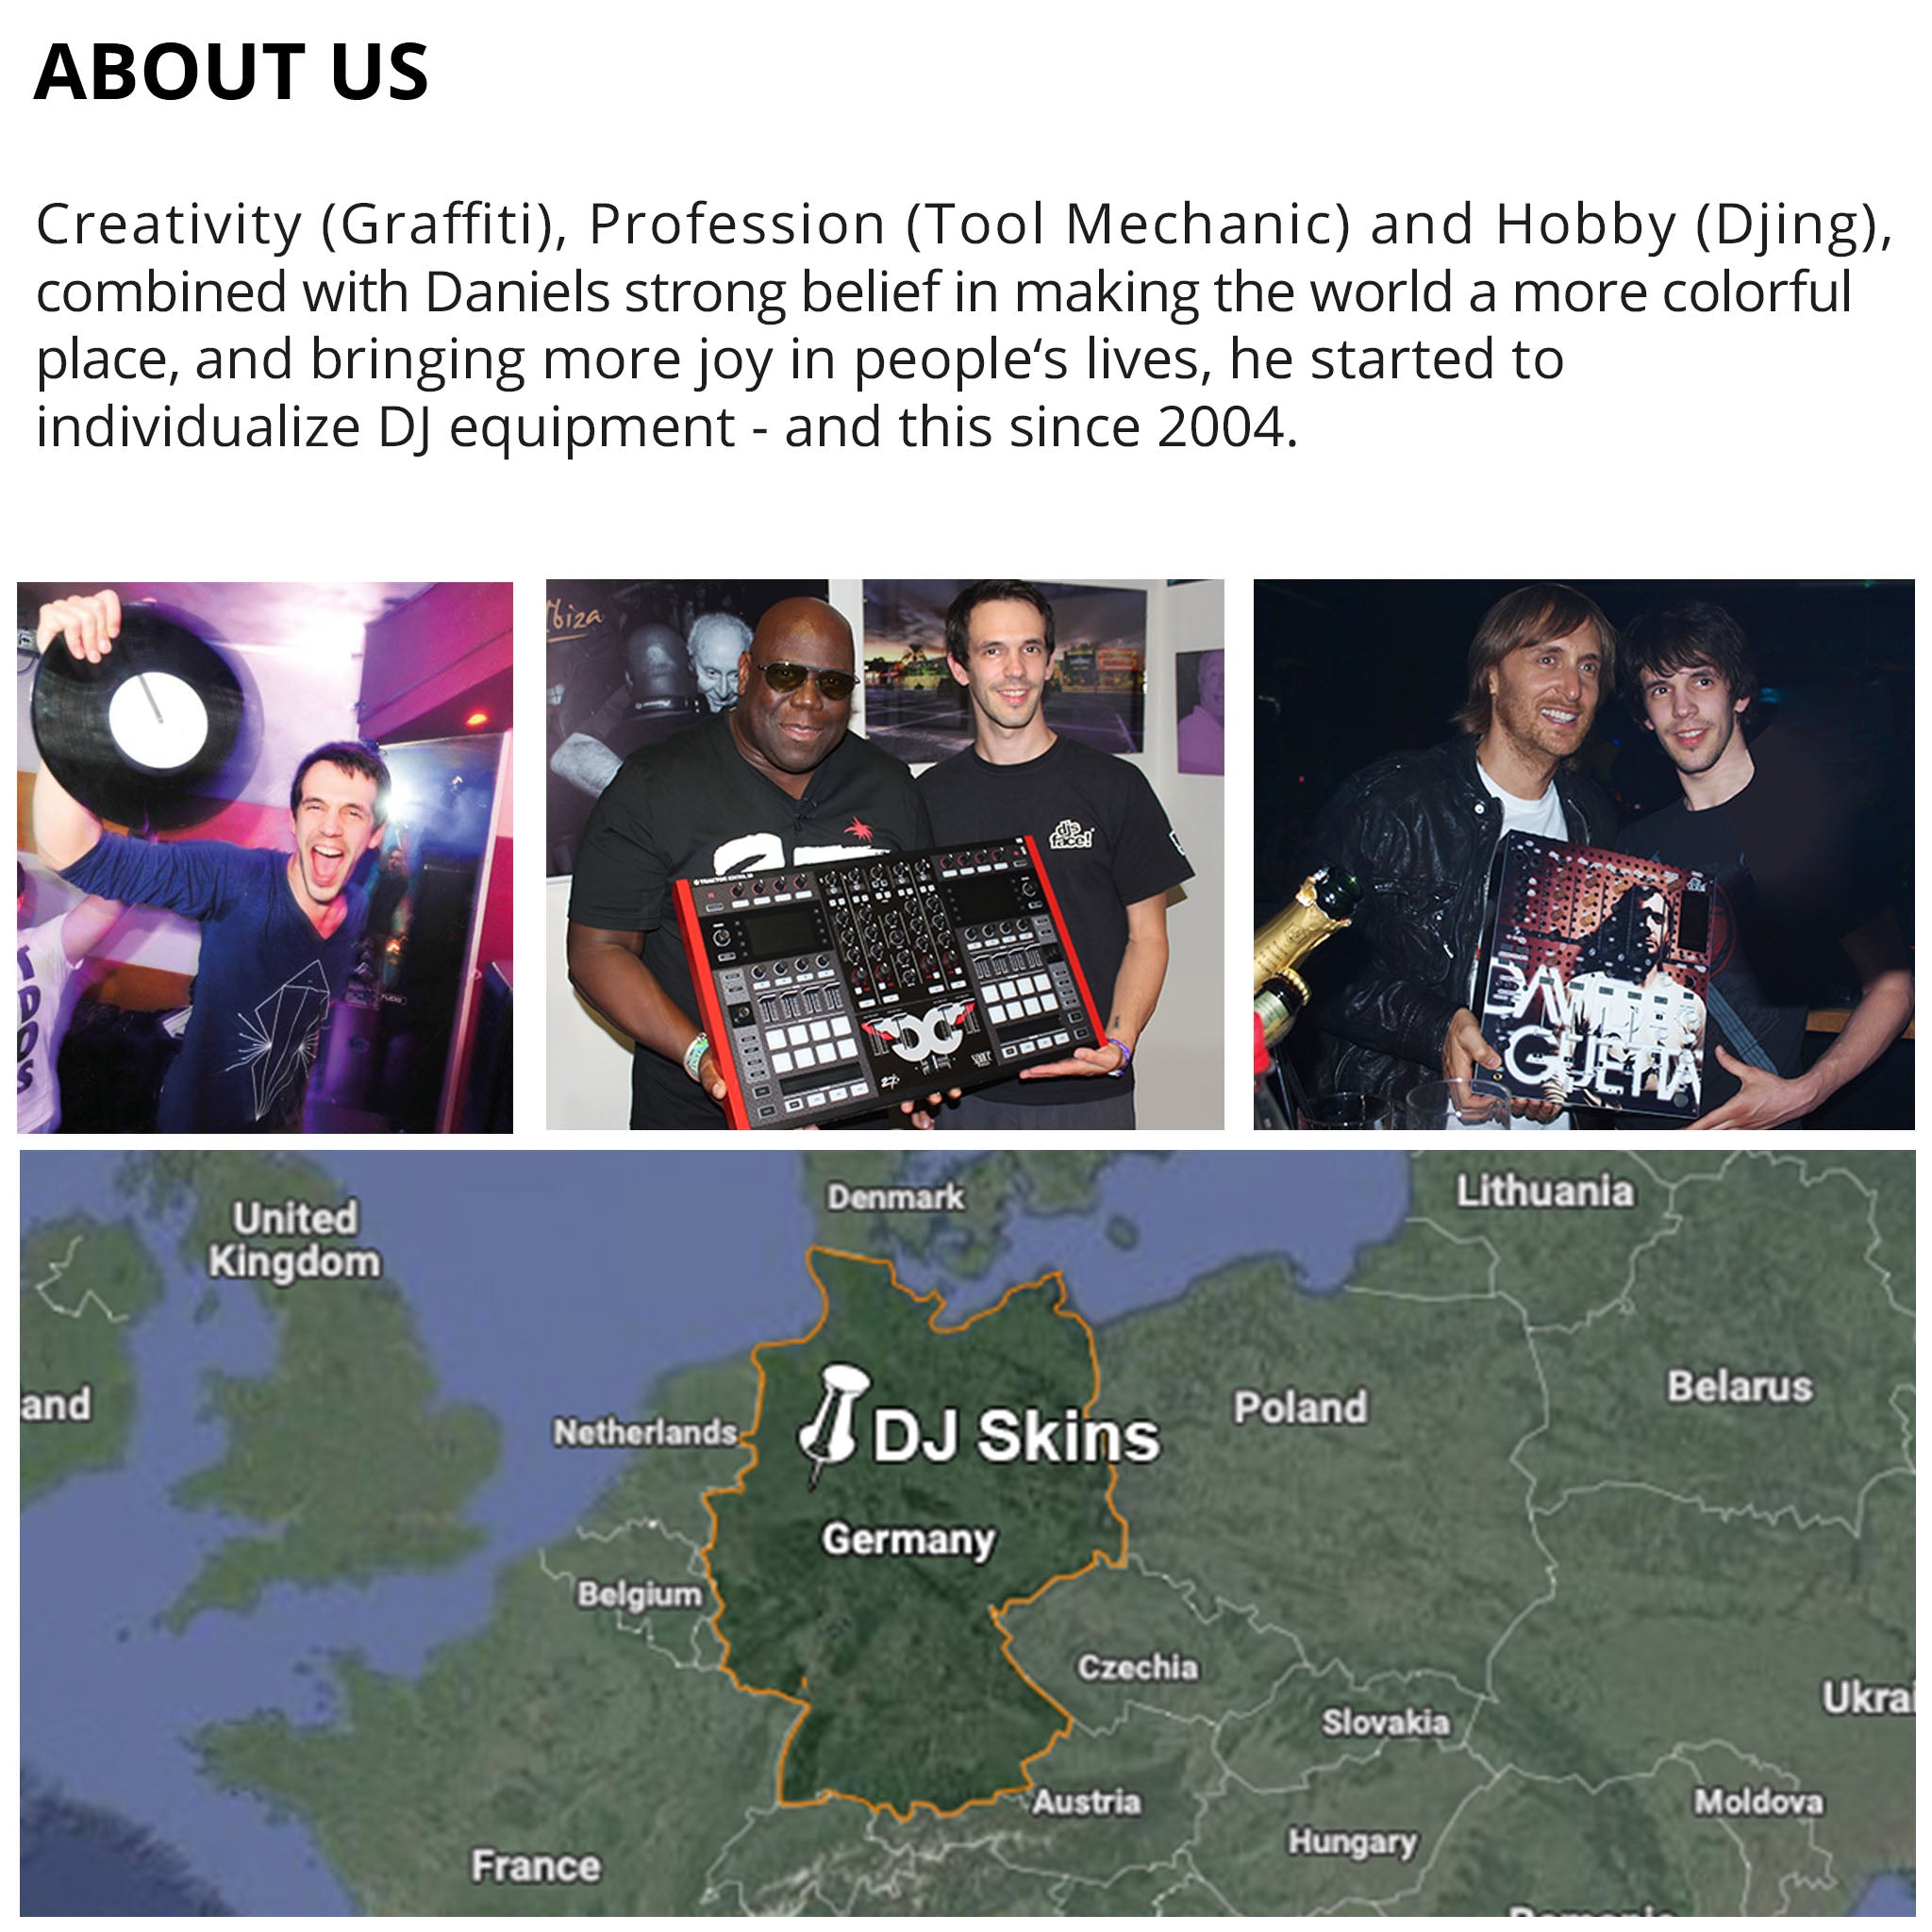 Pioneer DJ DJM 900 NEXUS 2 Skin Trashkid